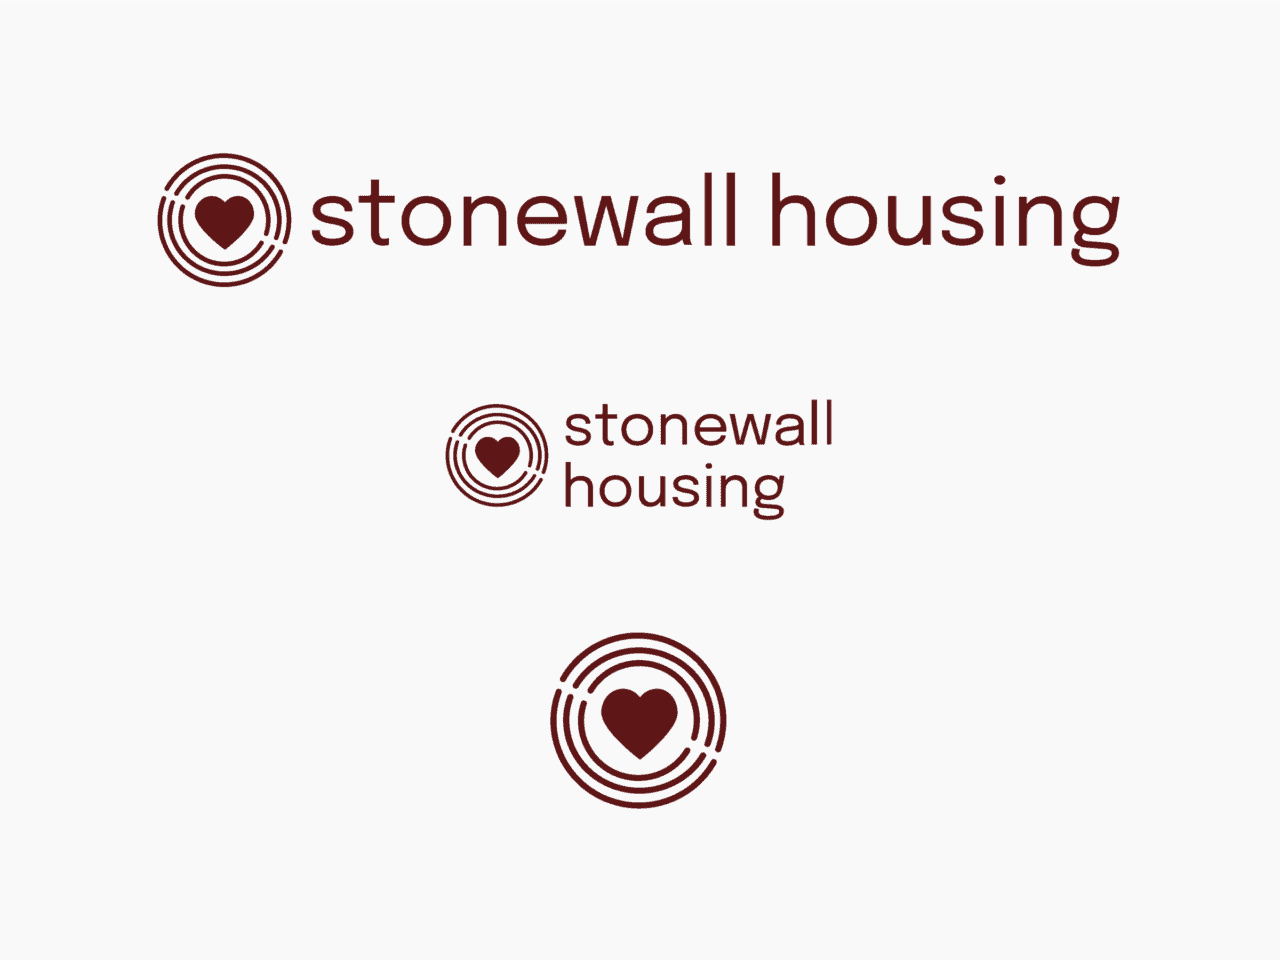 Branding for Stonewall Housing